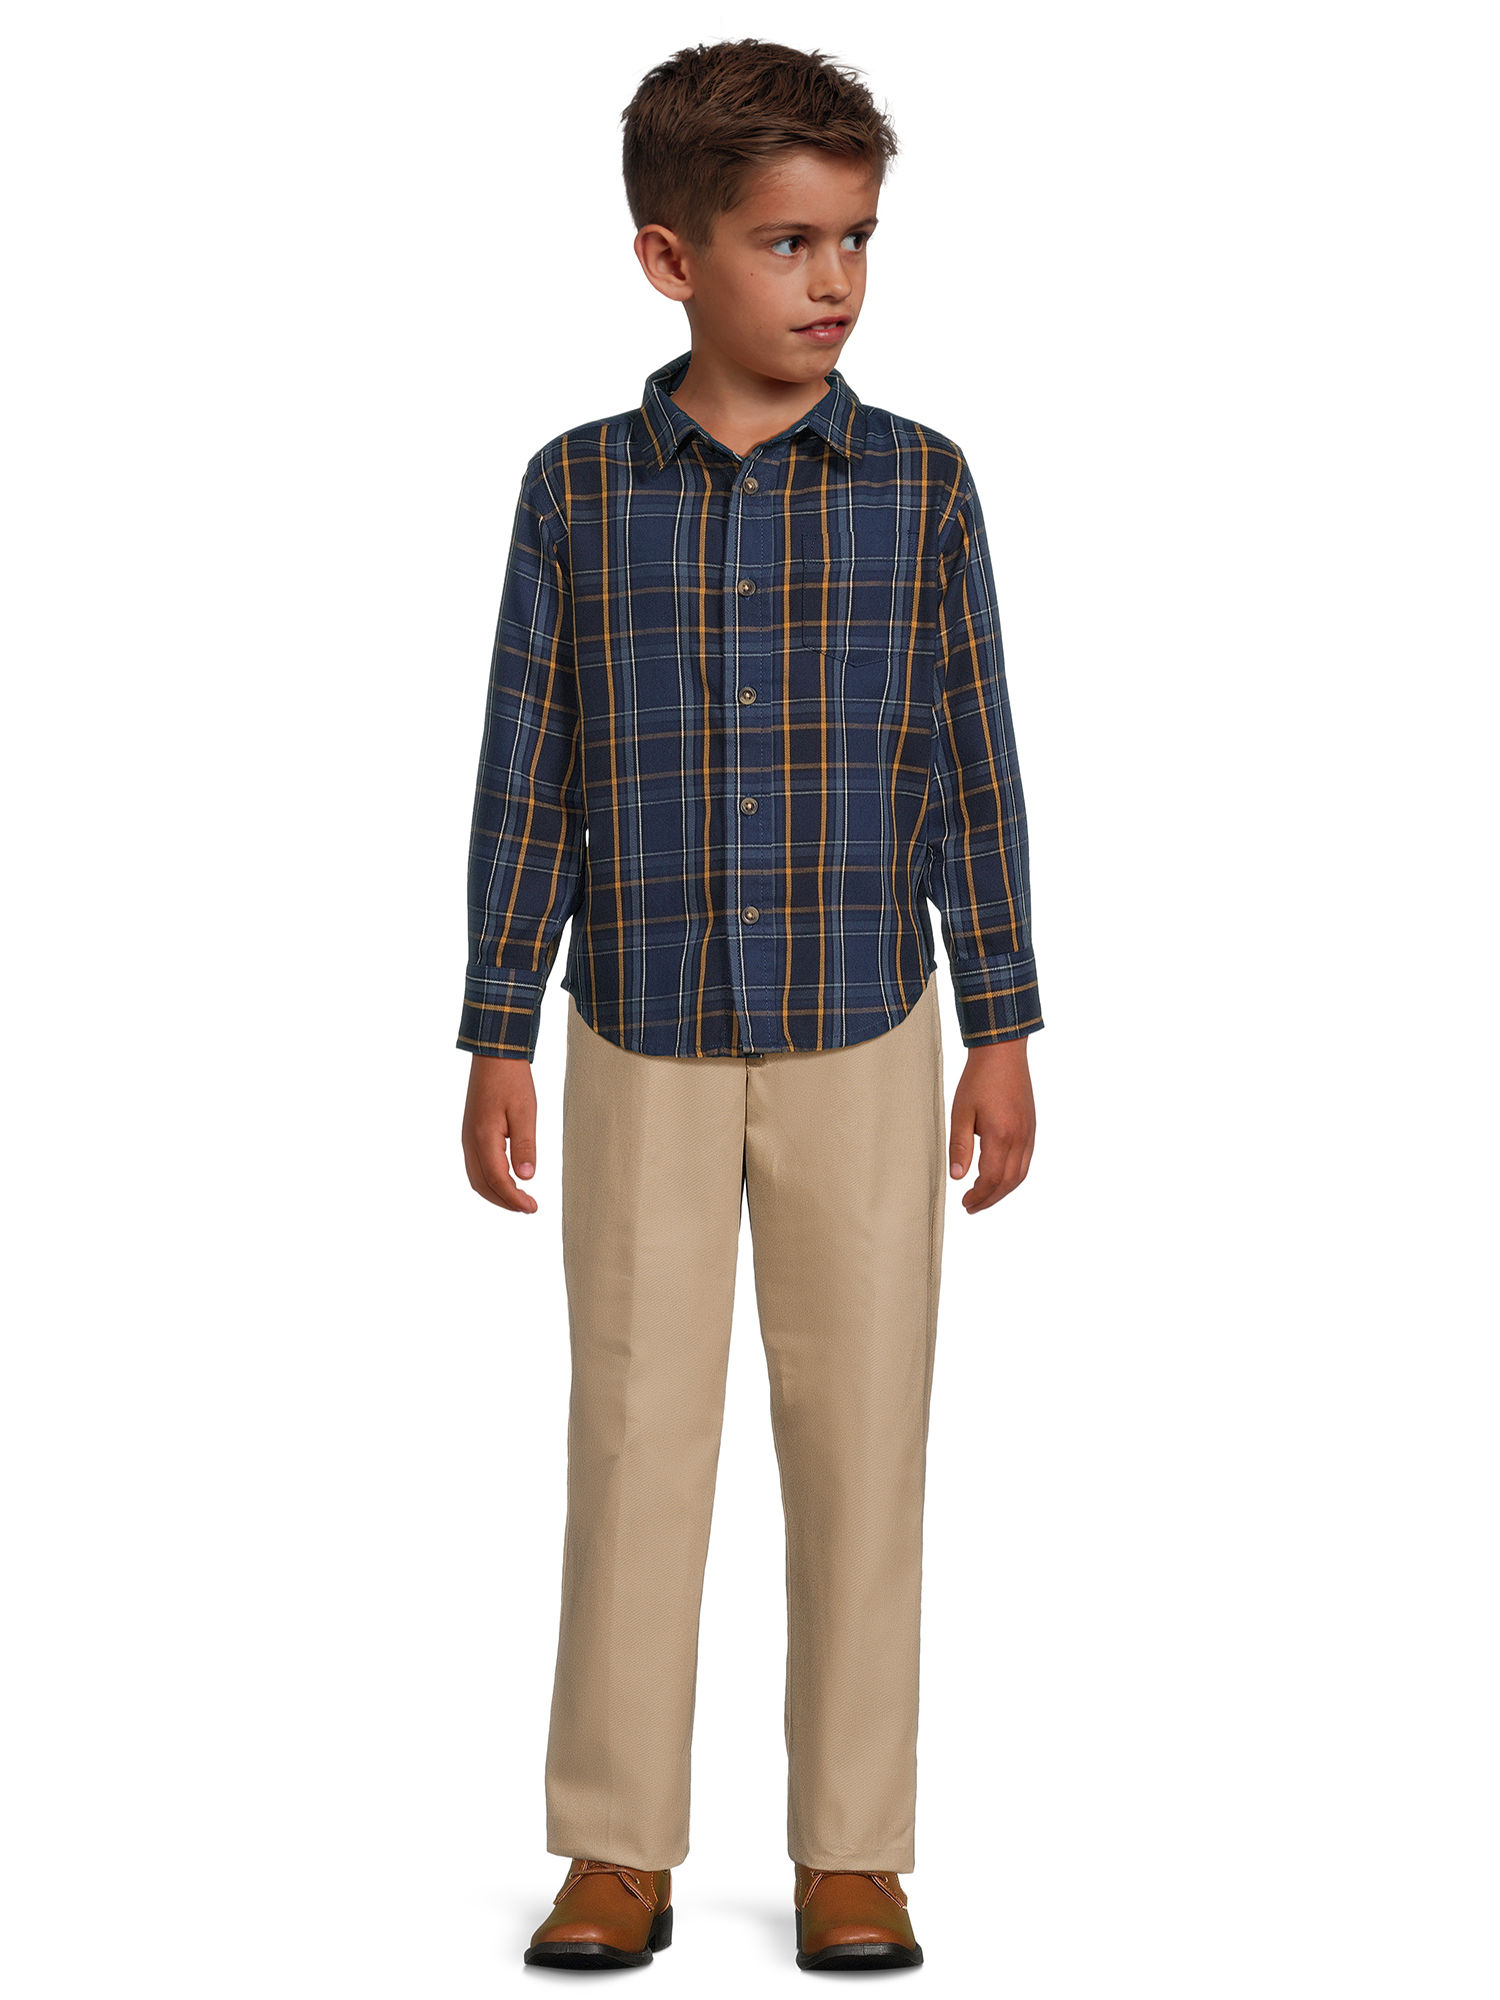 Wrangler Boys Long Sleeve Button-Up Twill Shirt, Sizes 4-18 & Husky - image 5 of 5